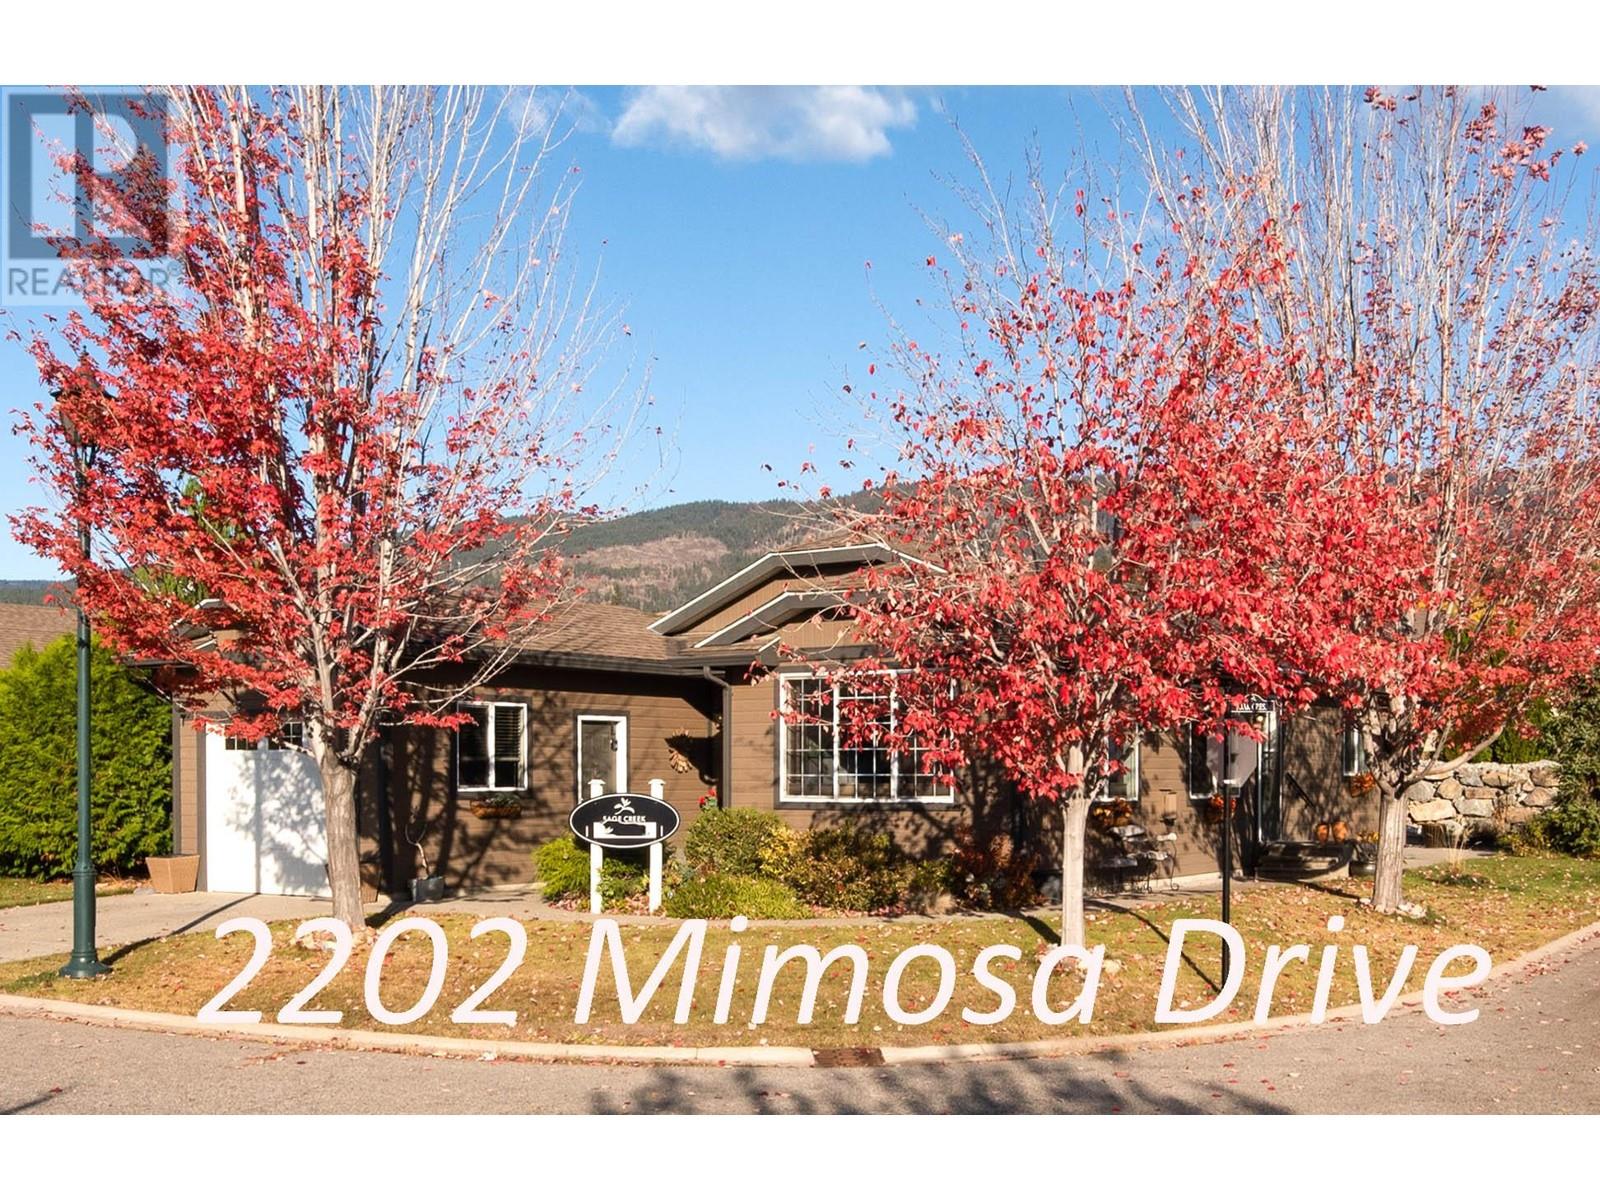  2202 Mimosa Drive, West Kelowna